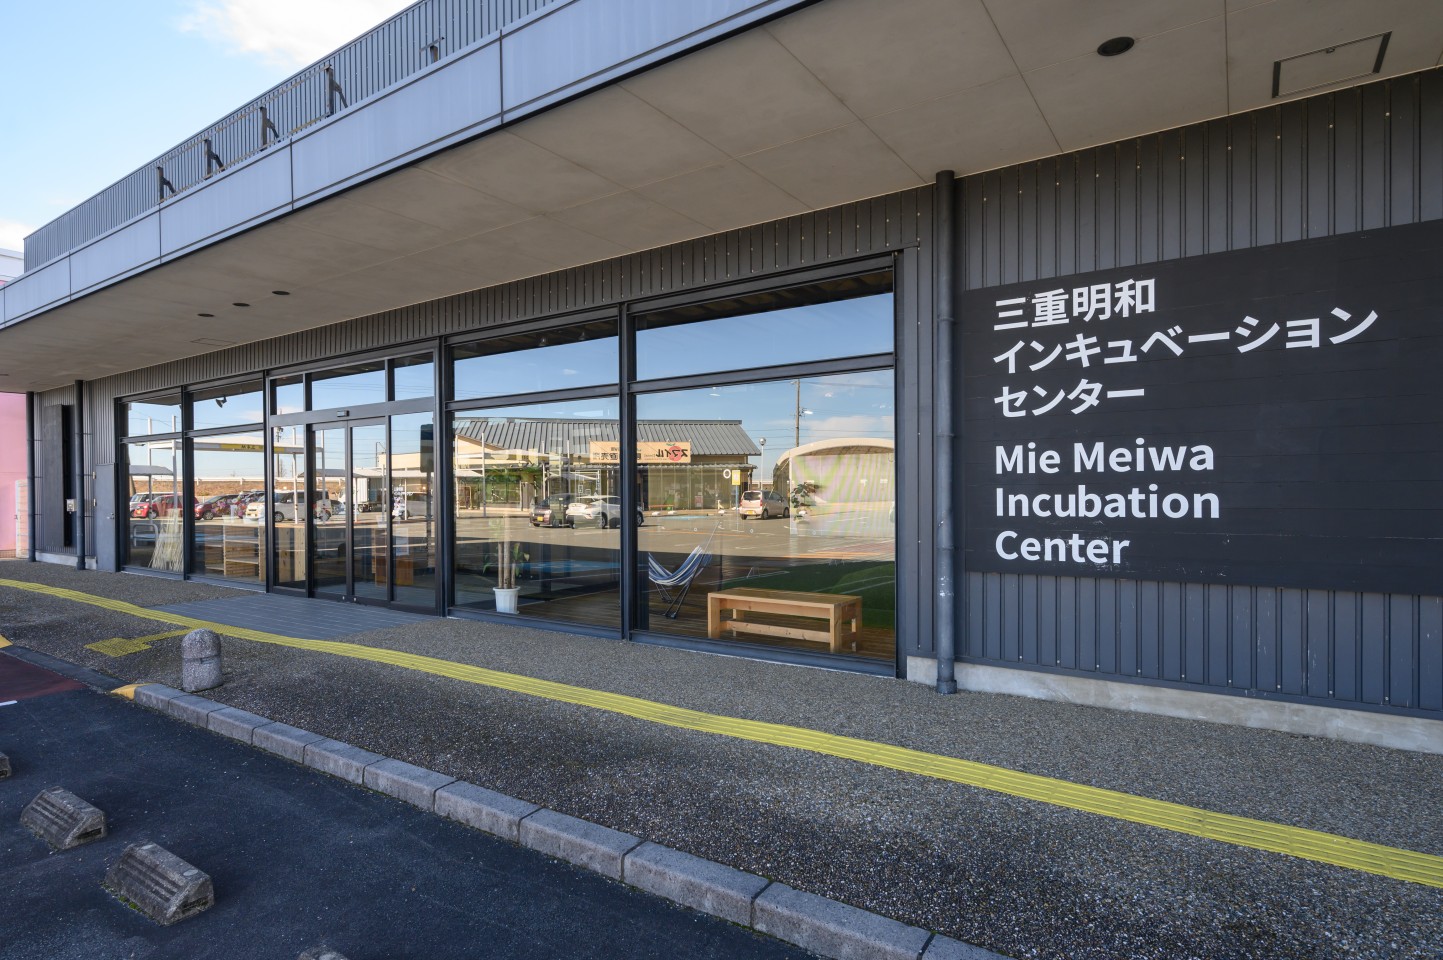 Mie Meiwa Incubation Center